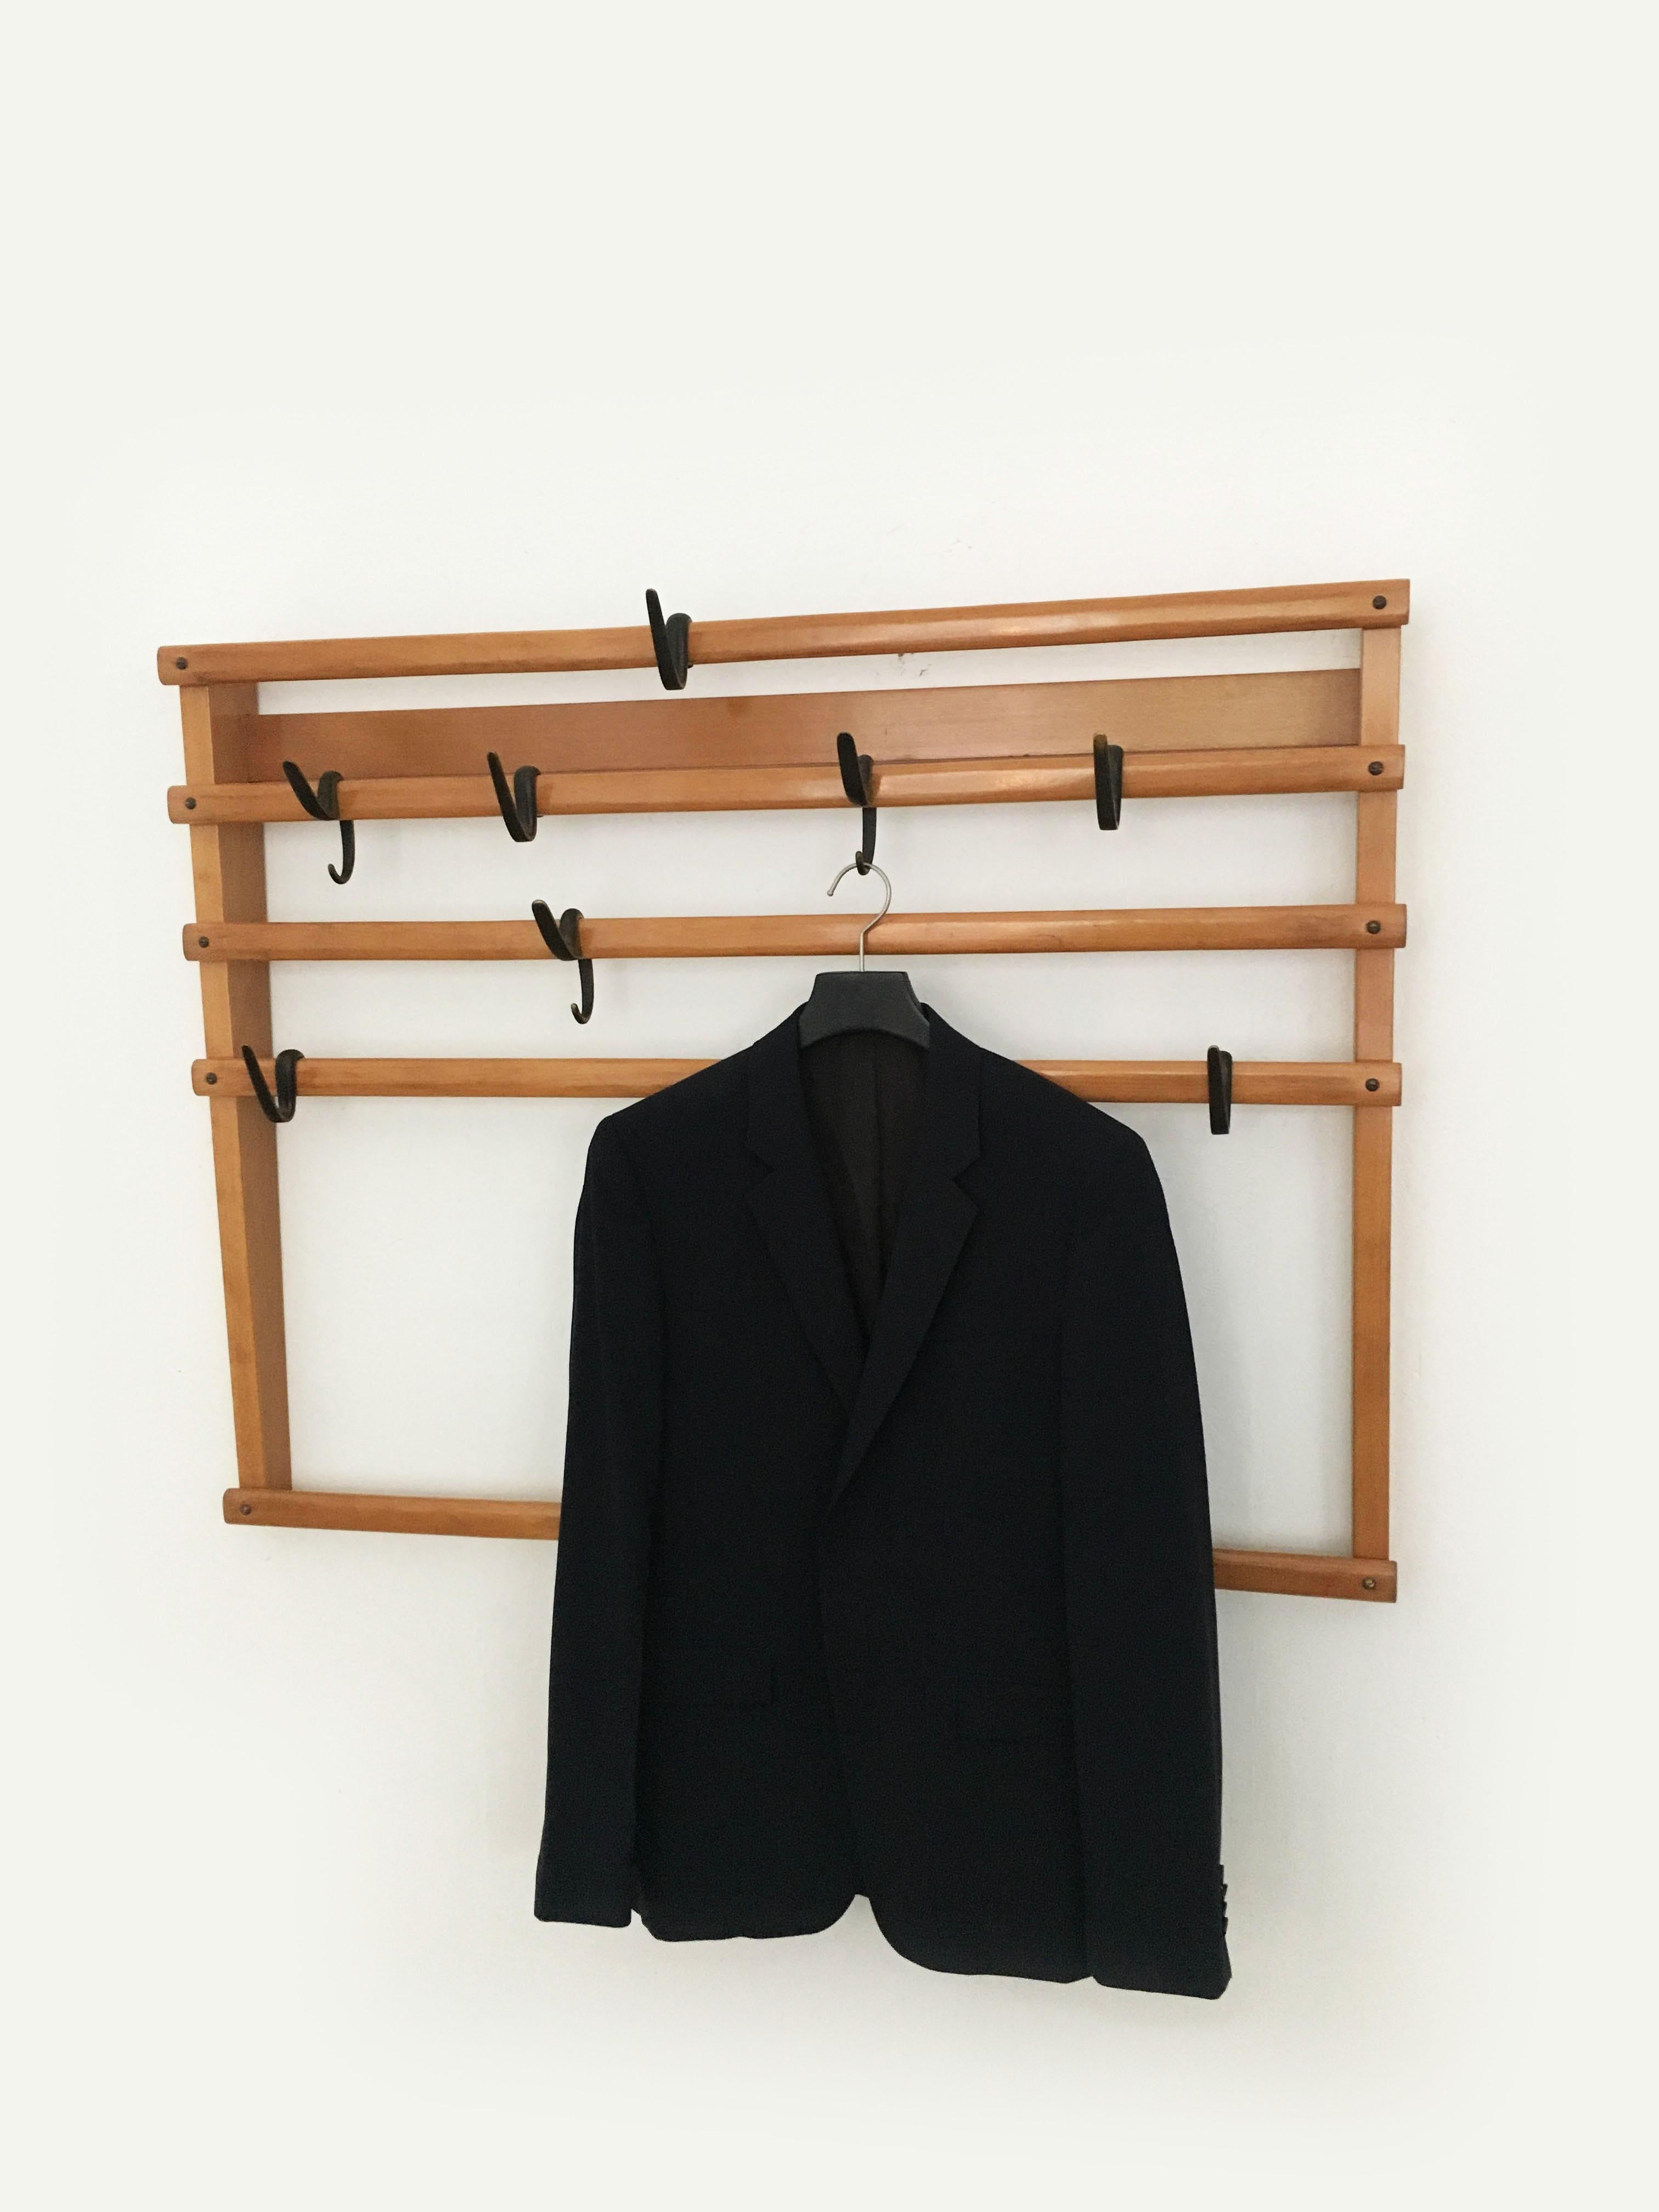 Carl Auböck Coat Rack Wardrobe, Austria, 1960s For Sale 3